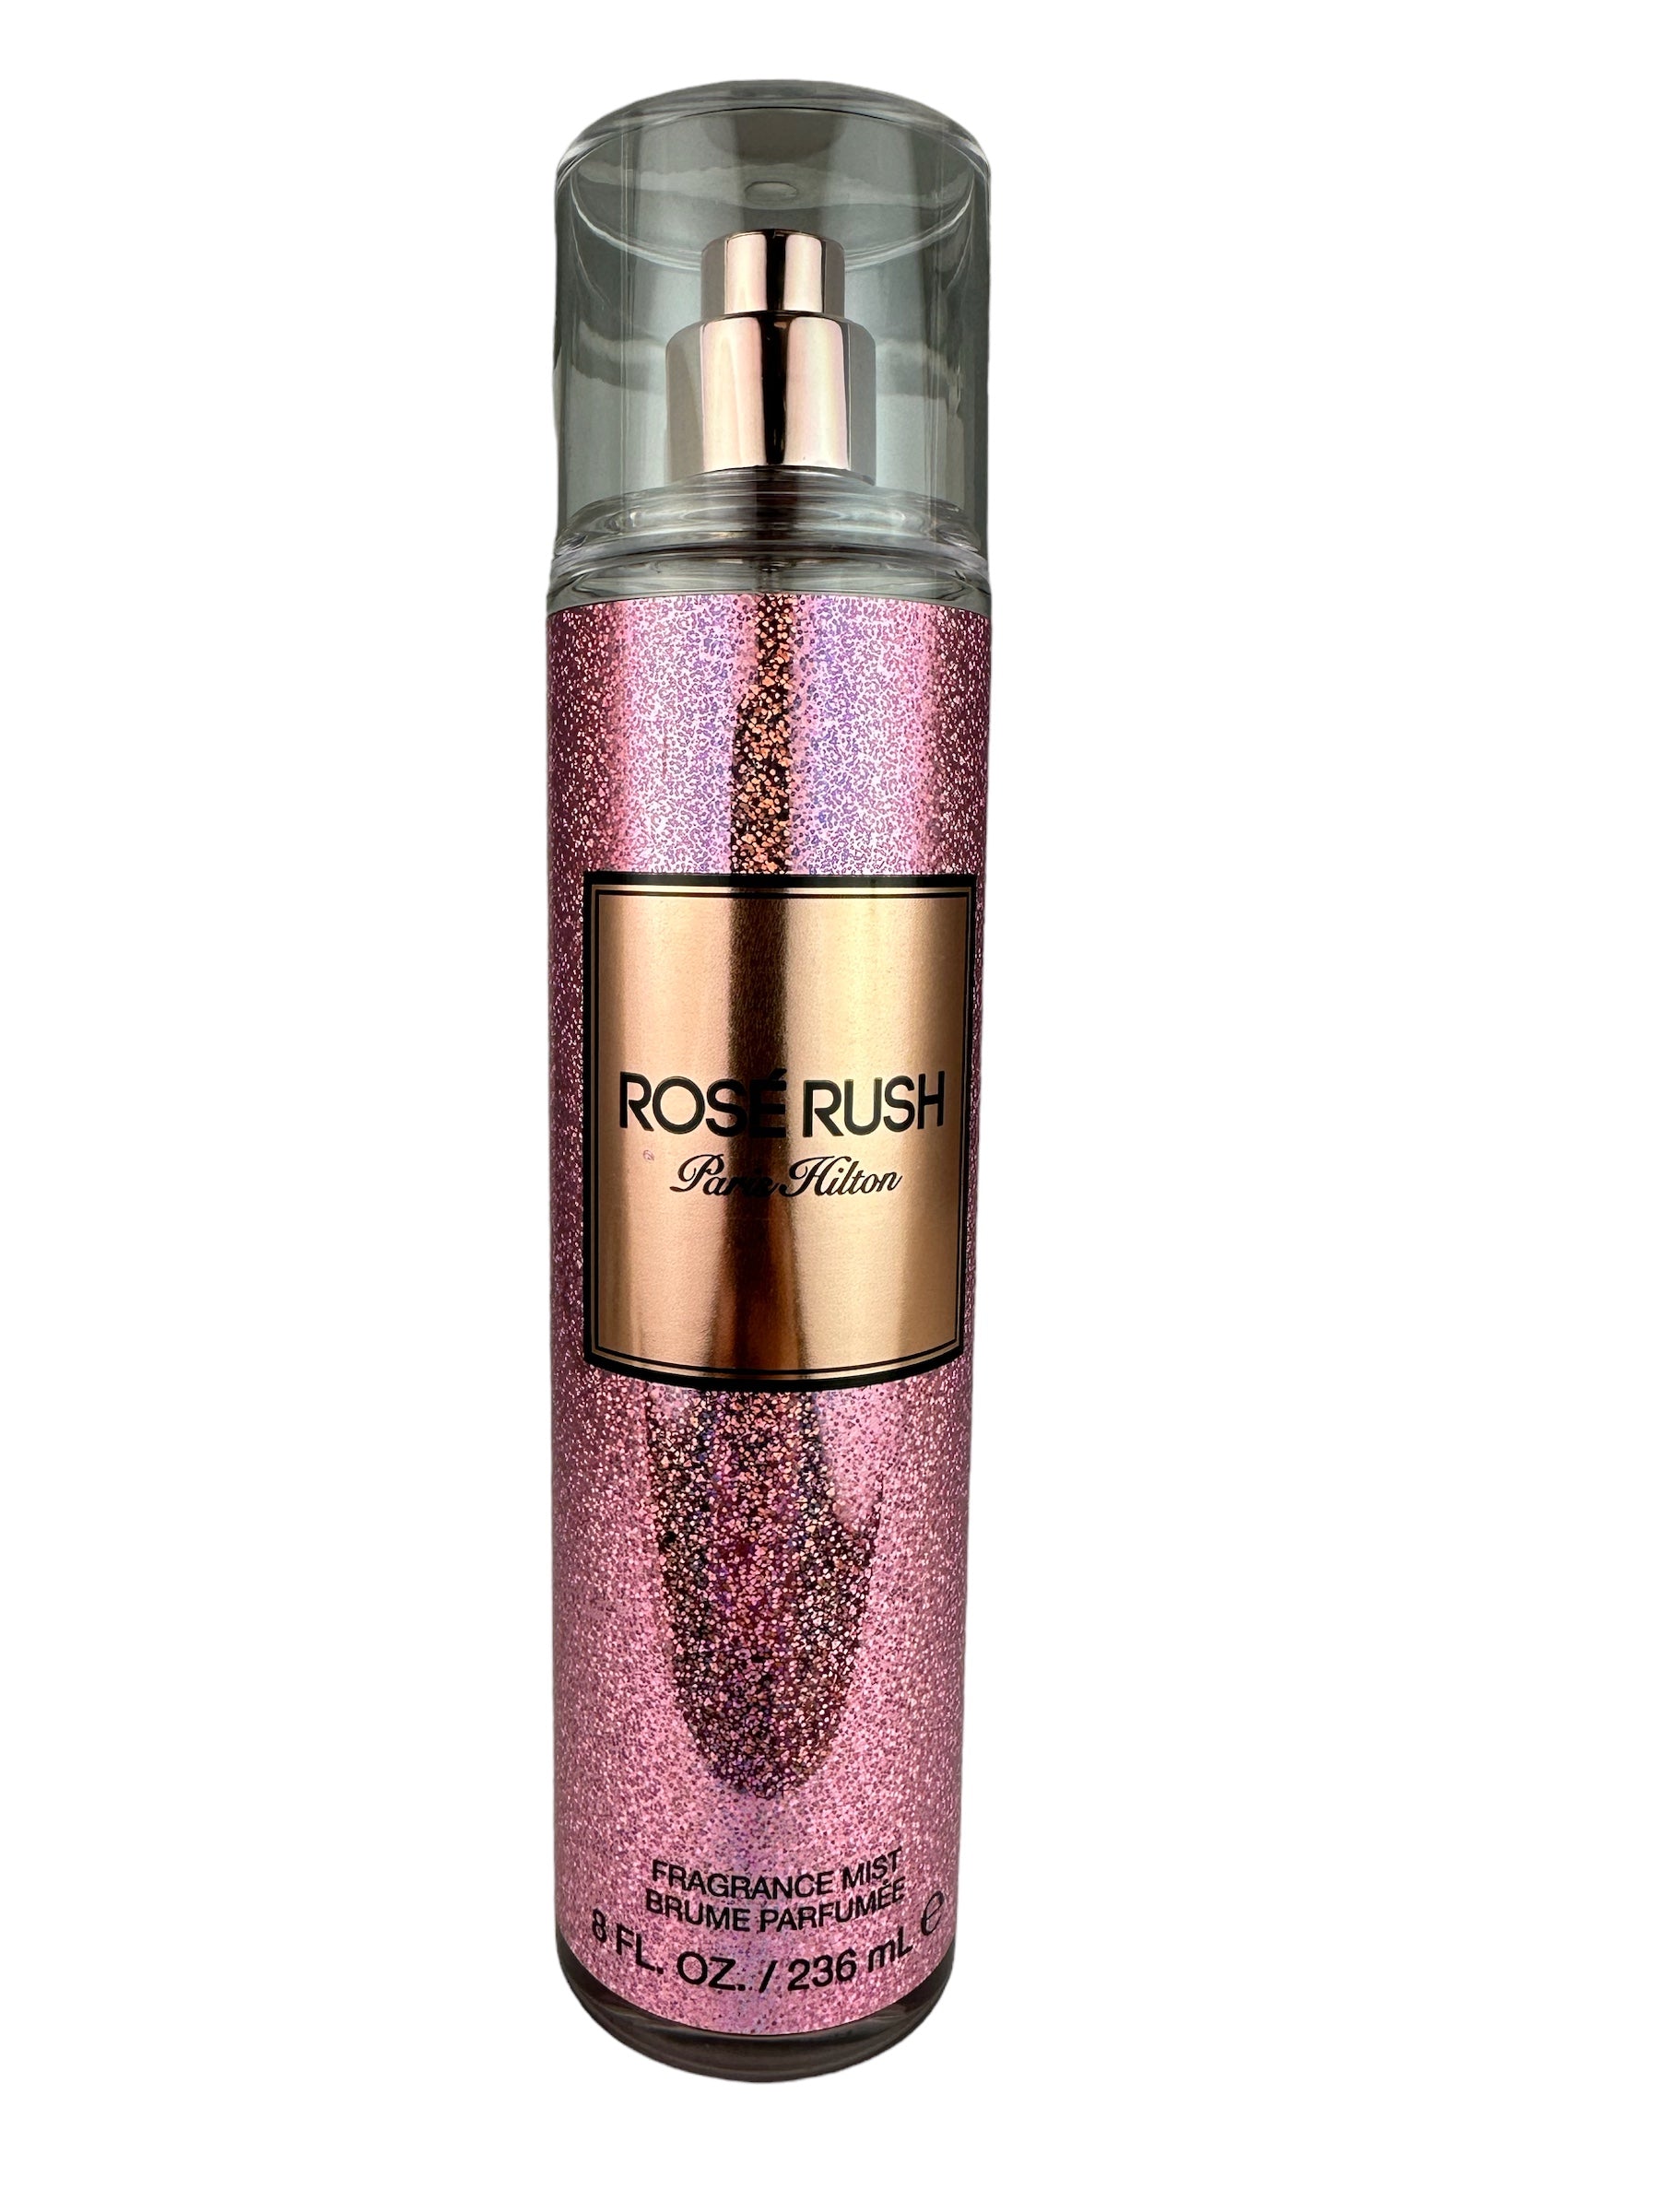 Paris Hilton Rose Rush Body Spray for Women